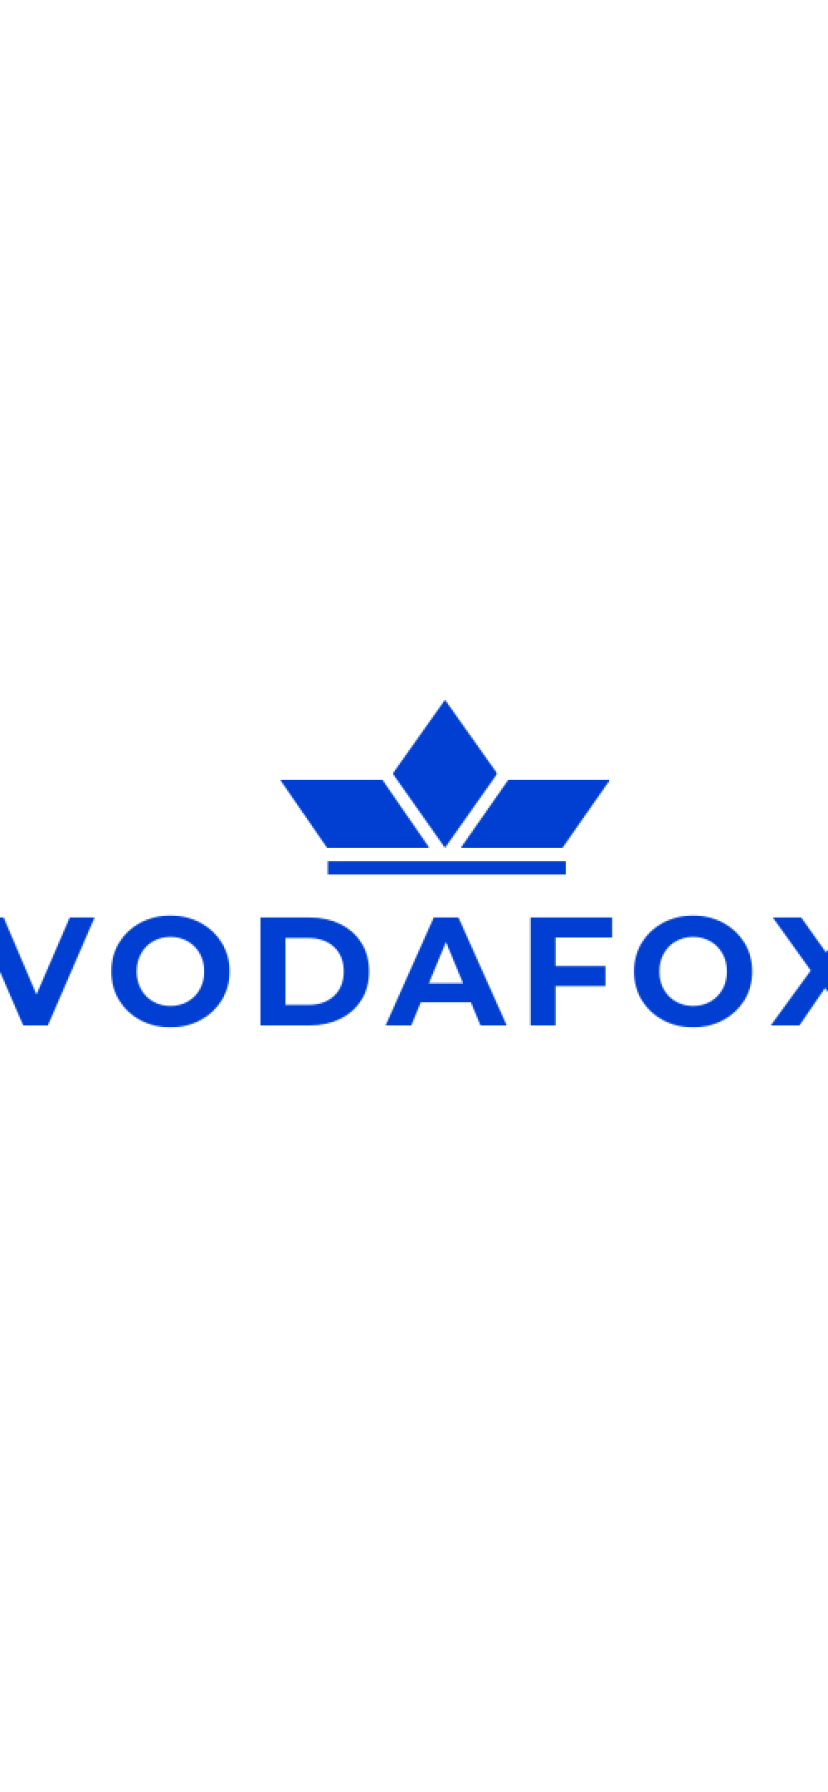 Vodafox.com Domain Name For Sale